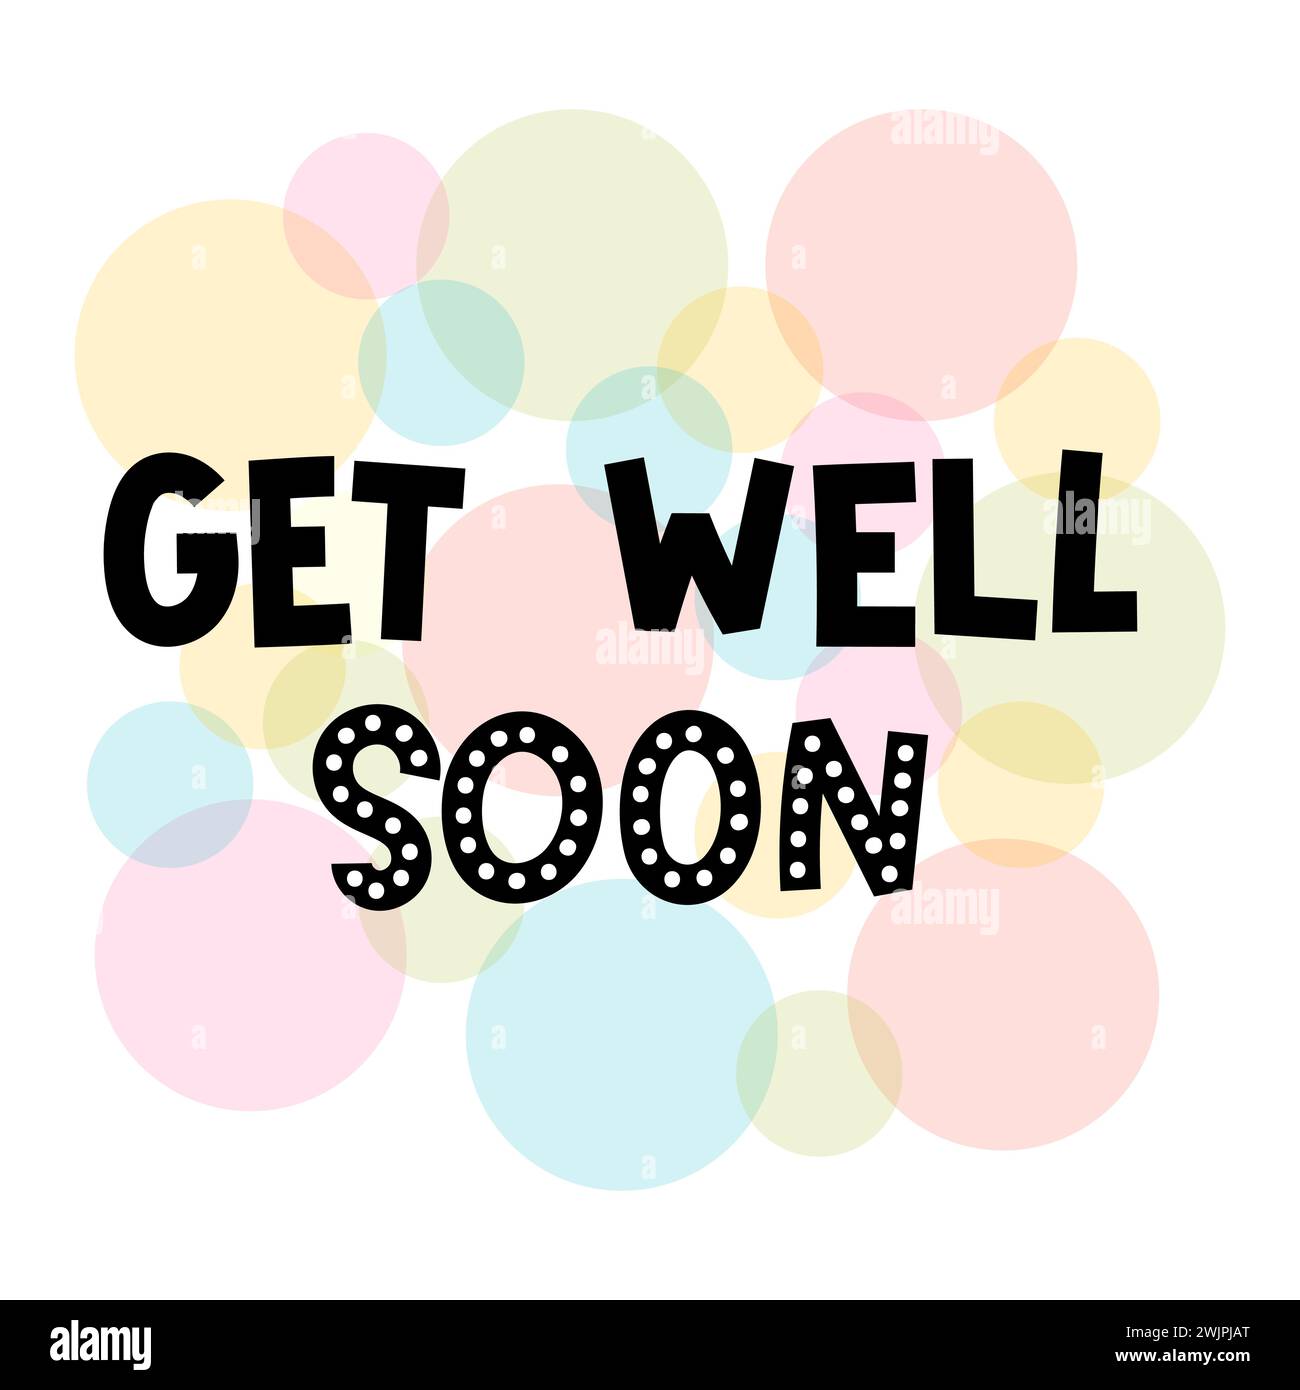 Get well soon. Hand drawn lettering. Motivational phrase. Design for poster, banner, postcard. Vector illustration Stock Vector